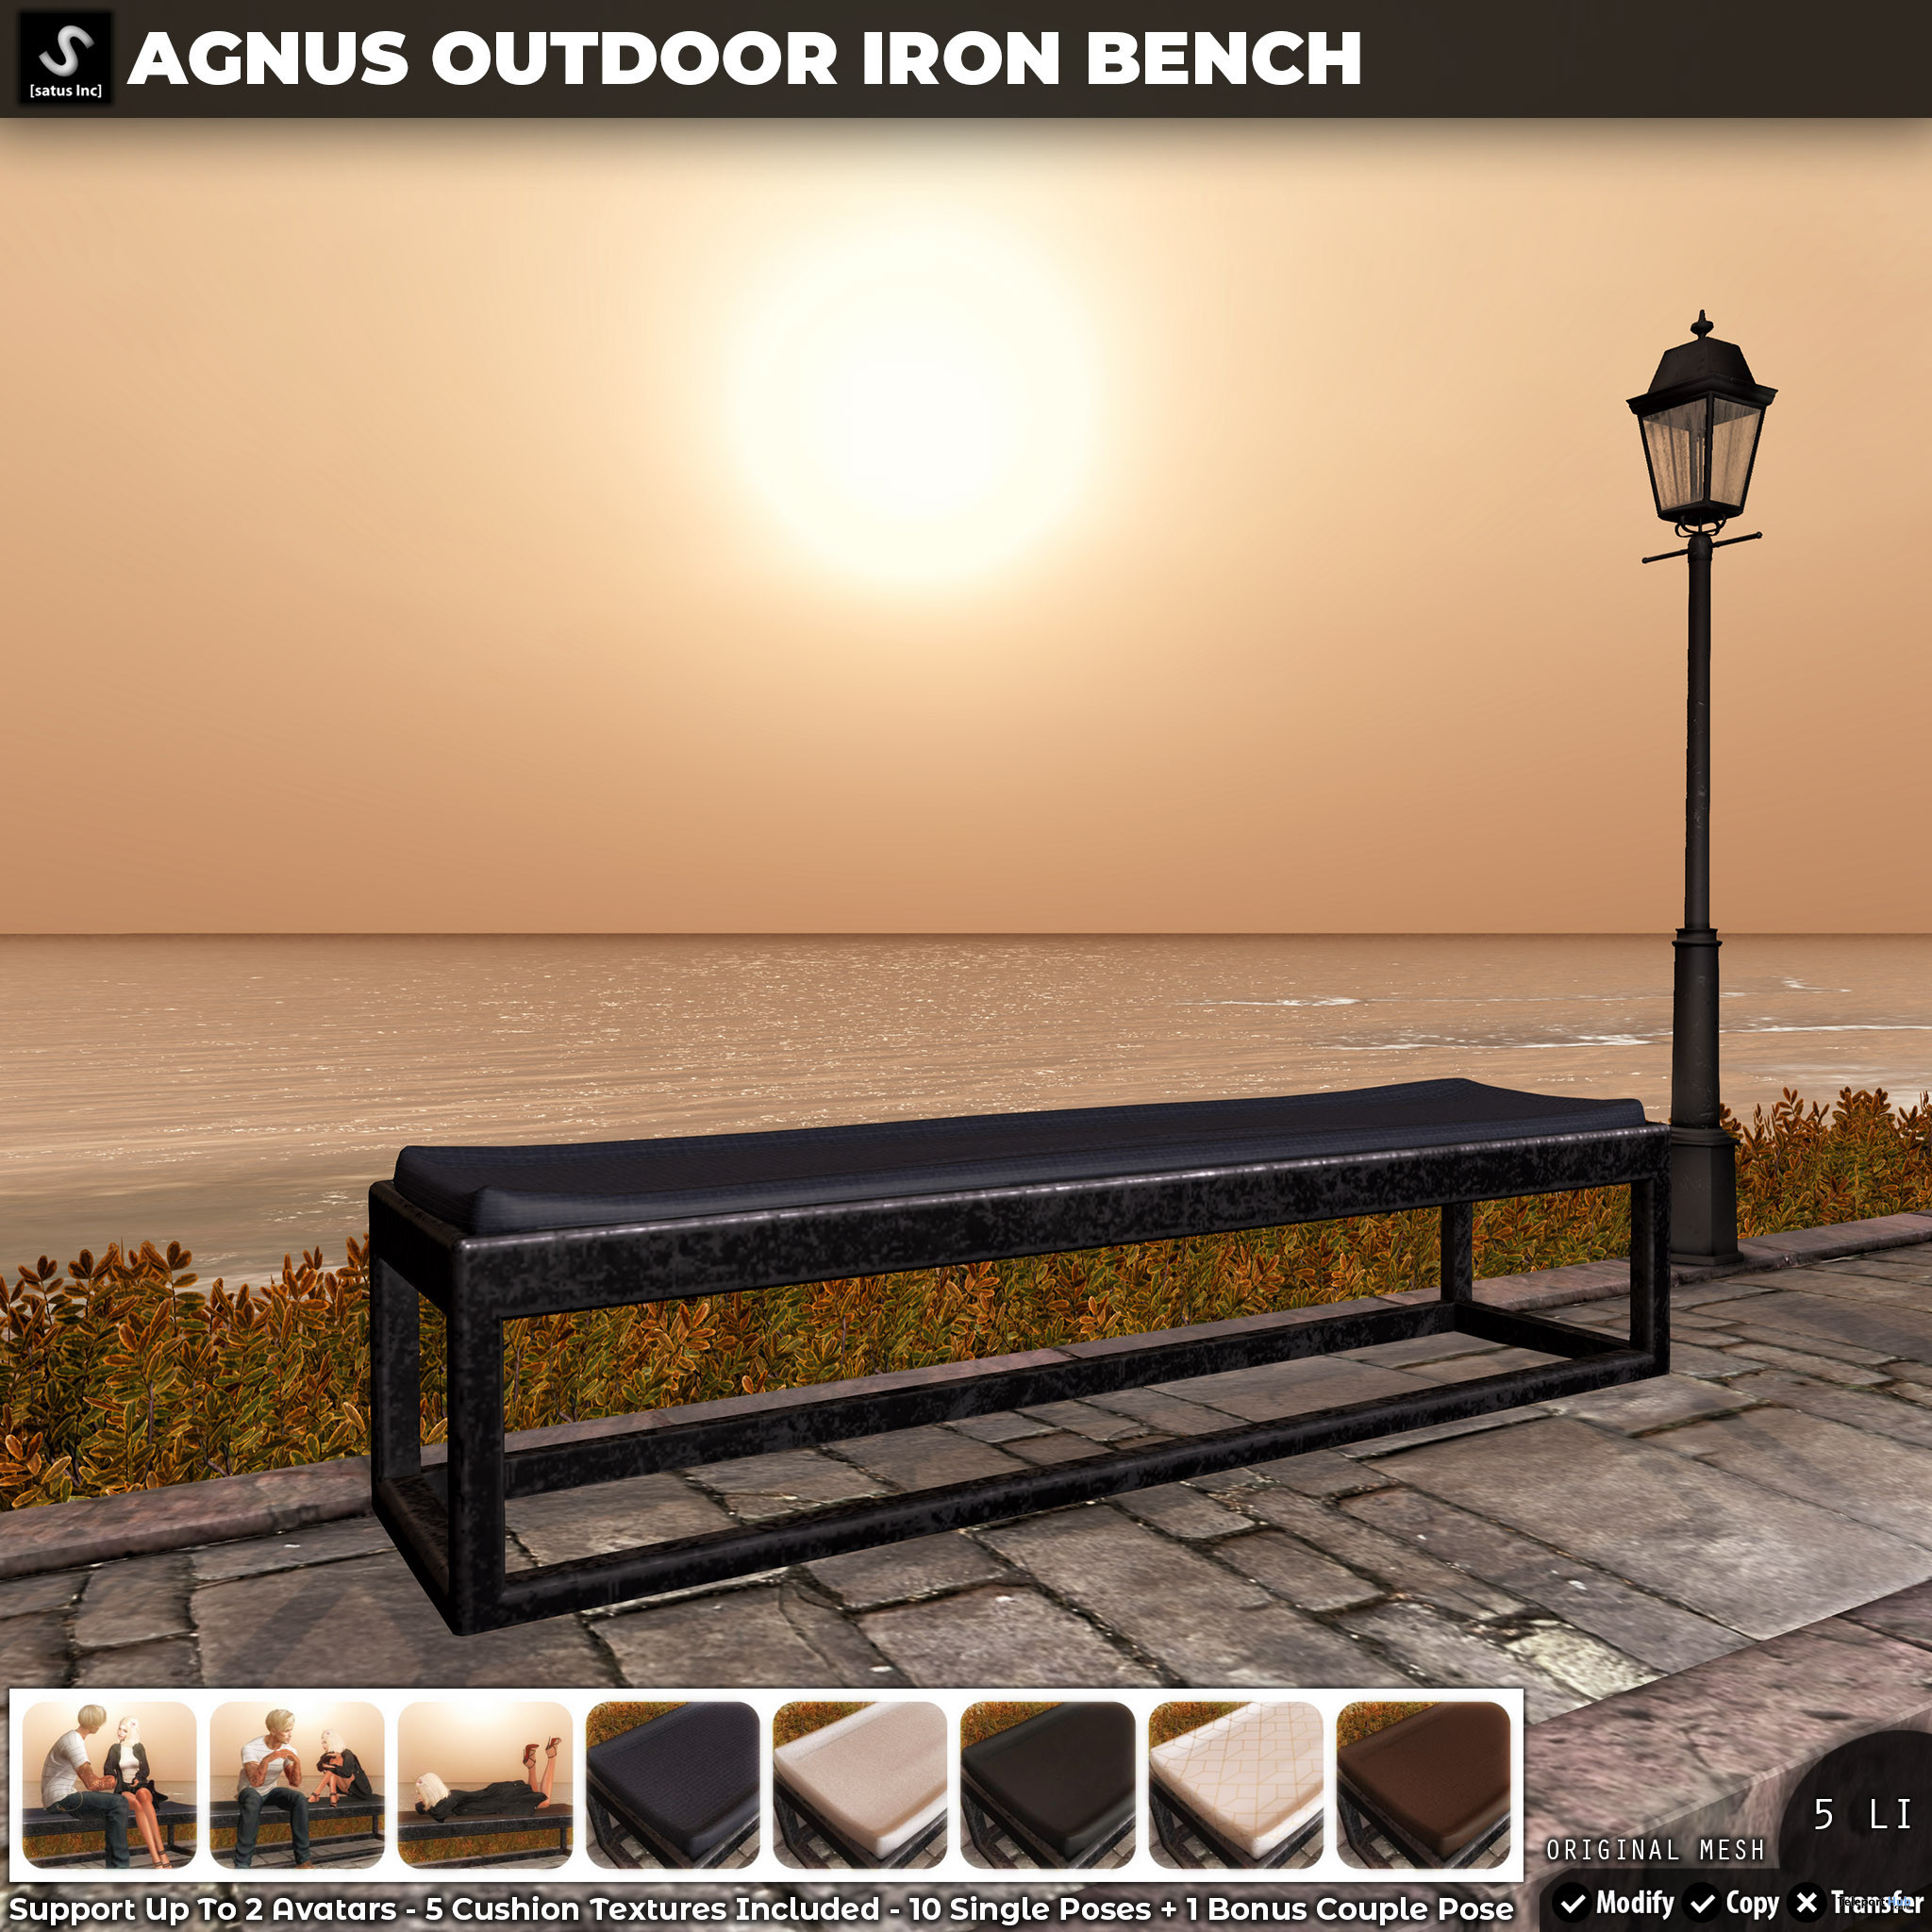 New Release: Agnus Outdoor Iron Bench by [satus Inc] - Teleport Hub - teleporthub.com